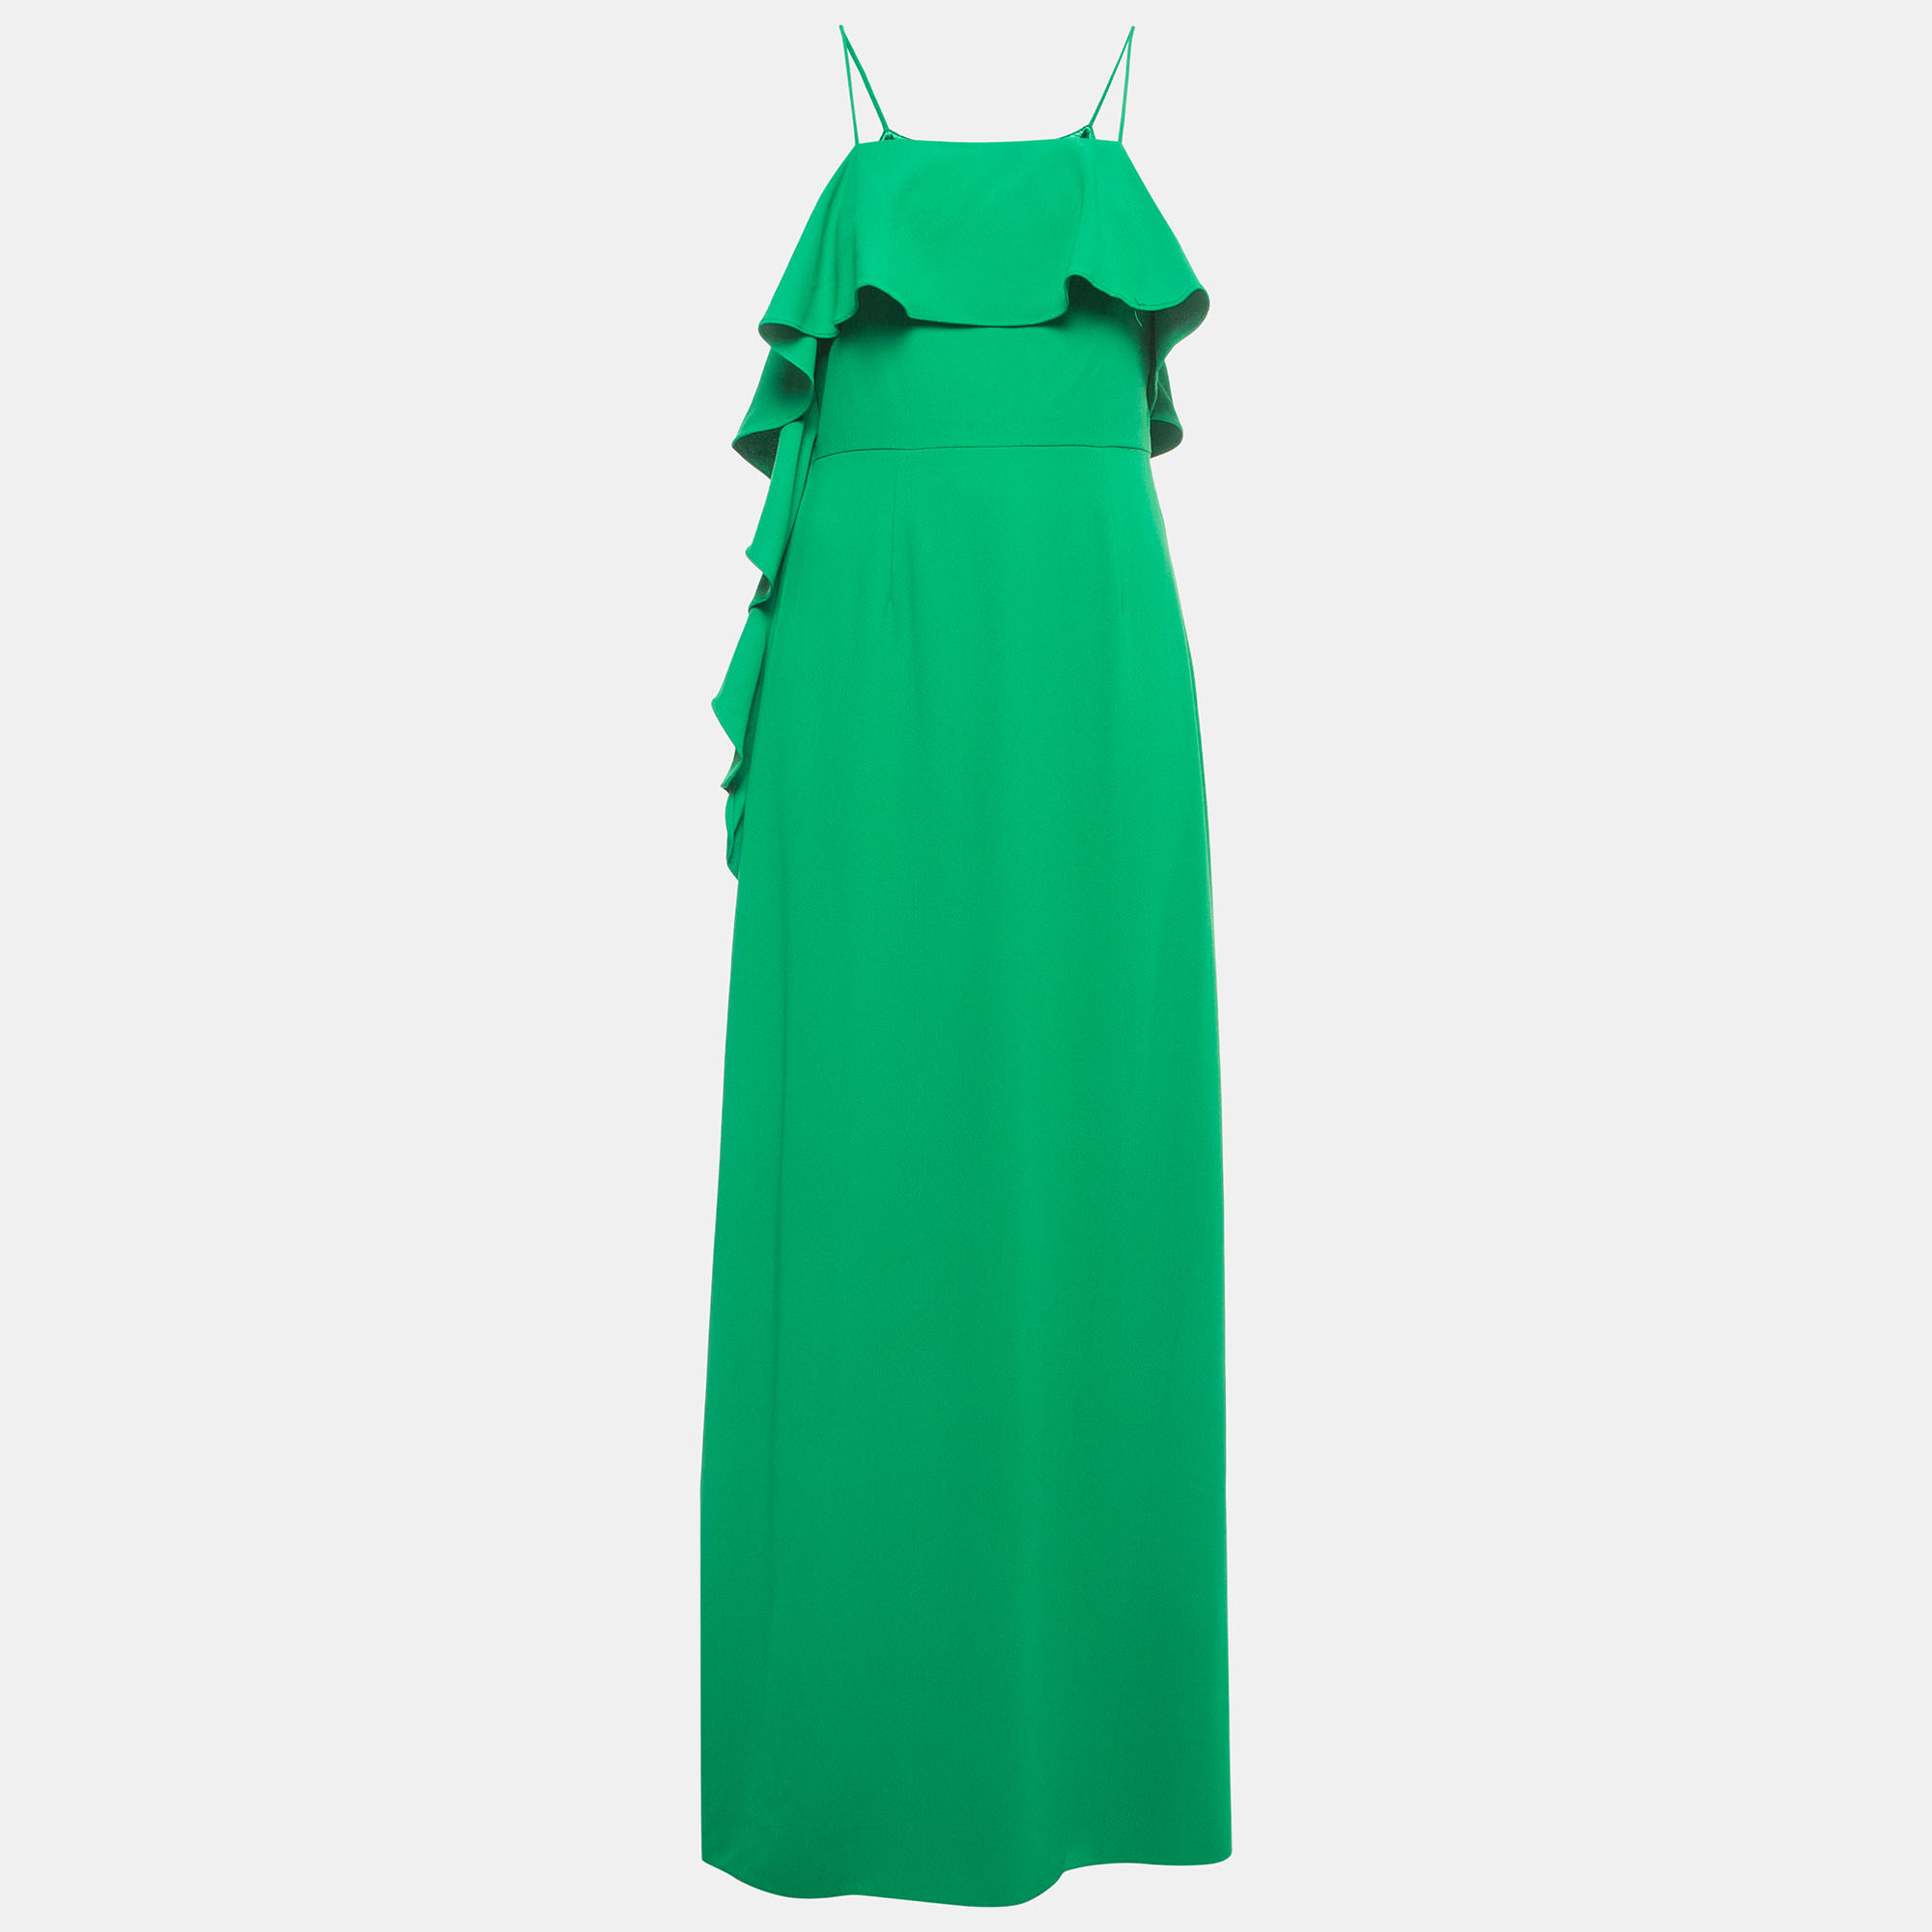 Ml by monique lhuillier green crepe ruffled long dress m